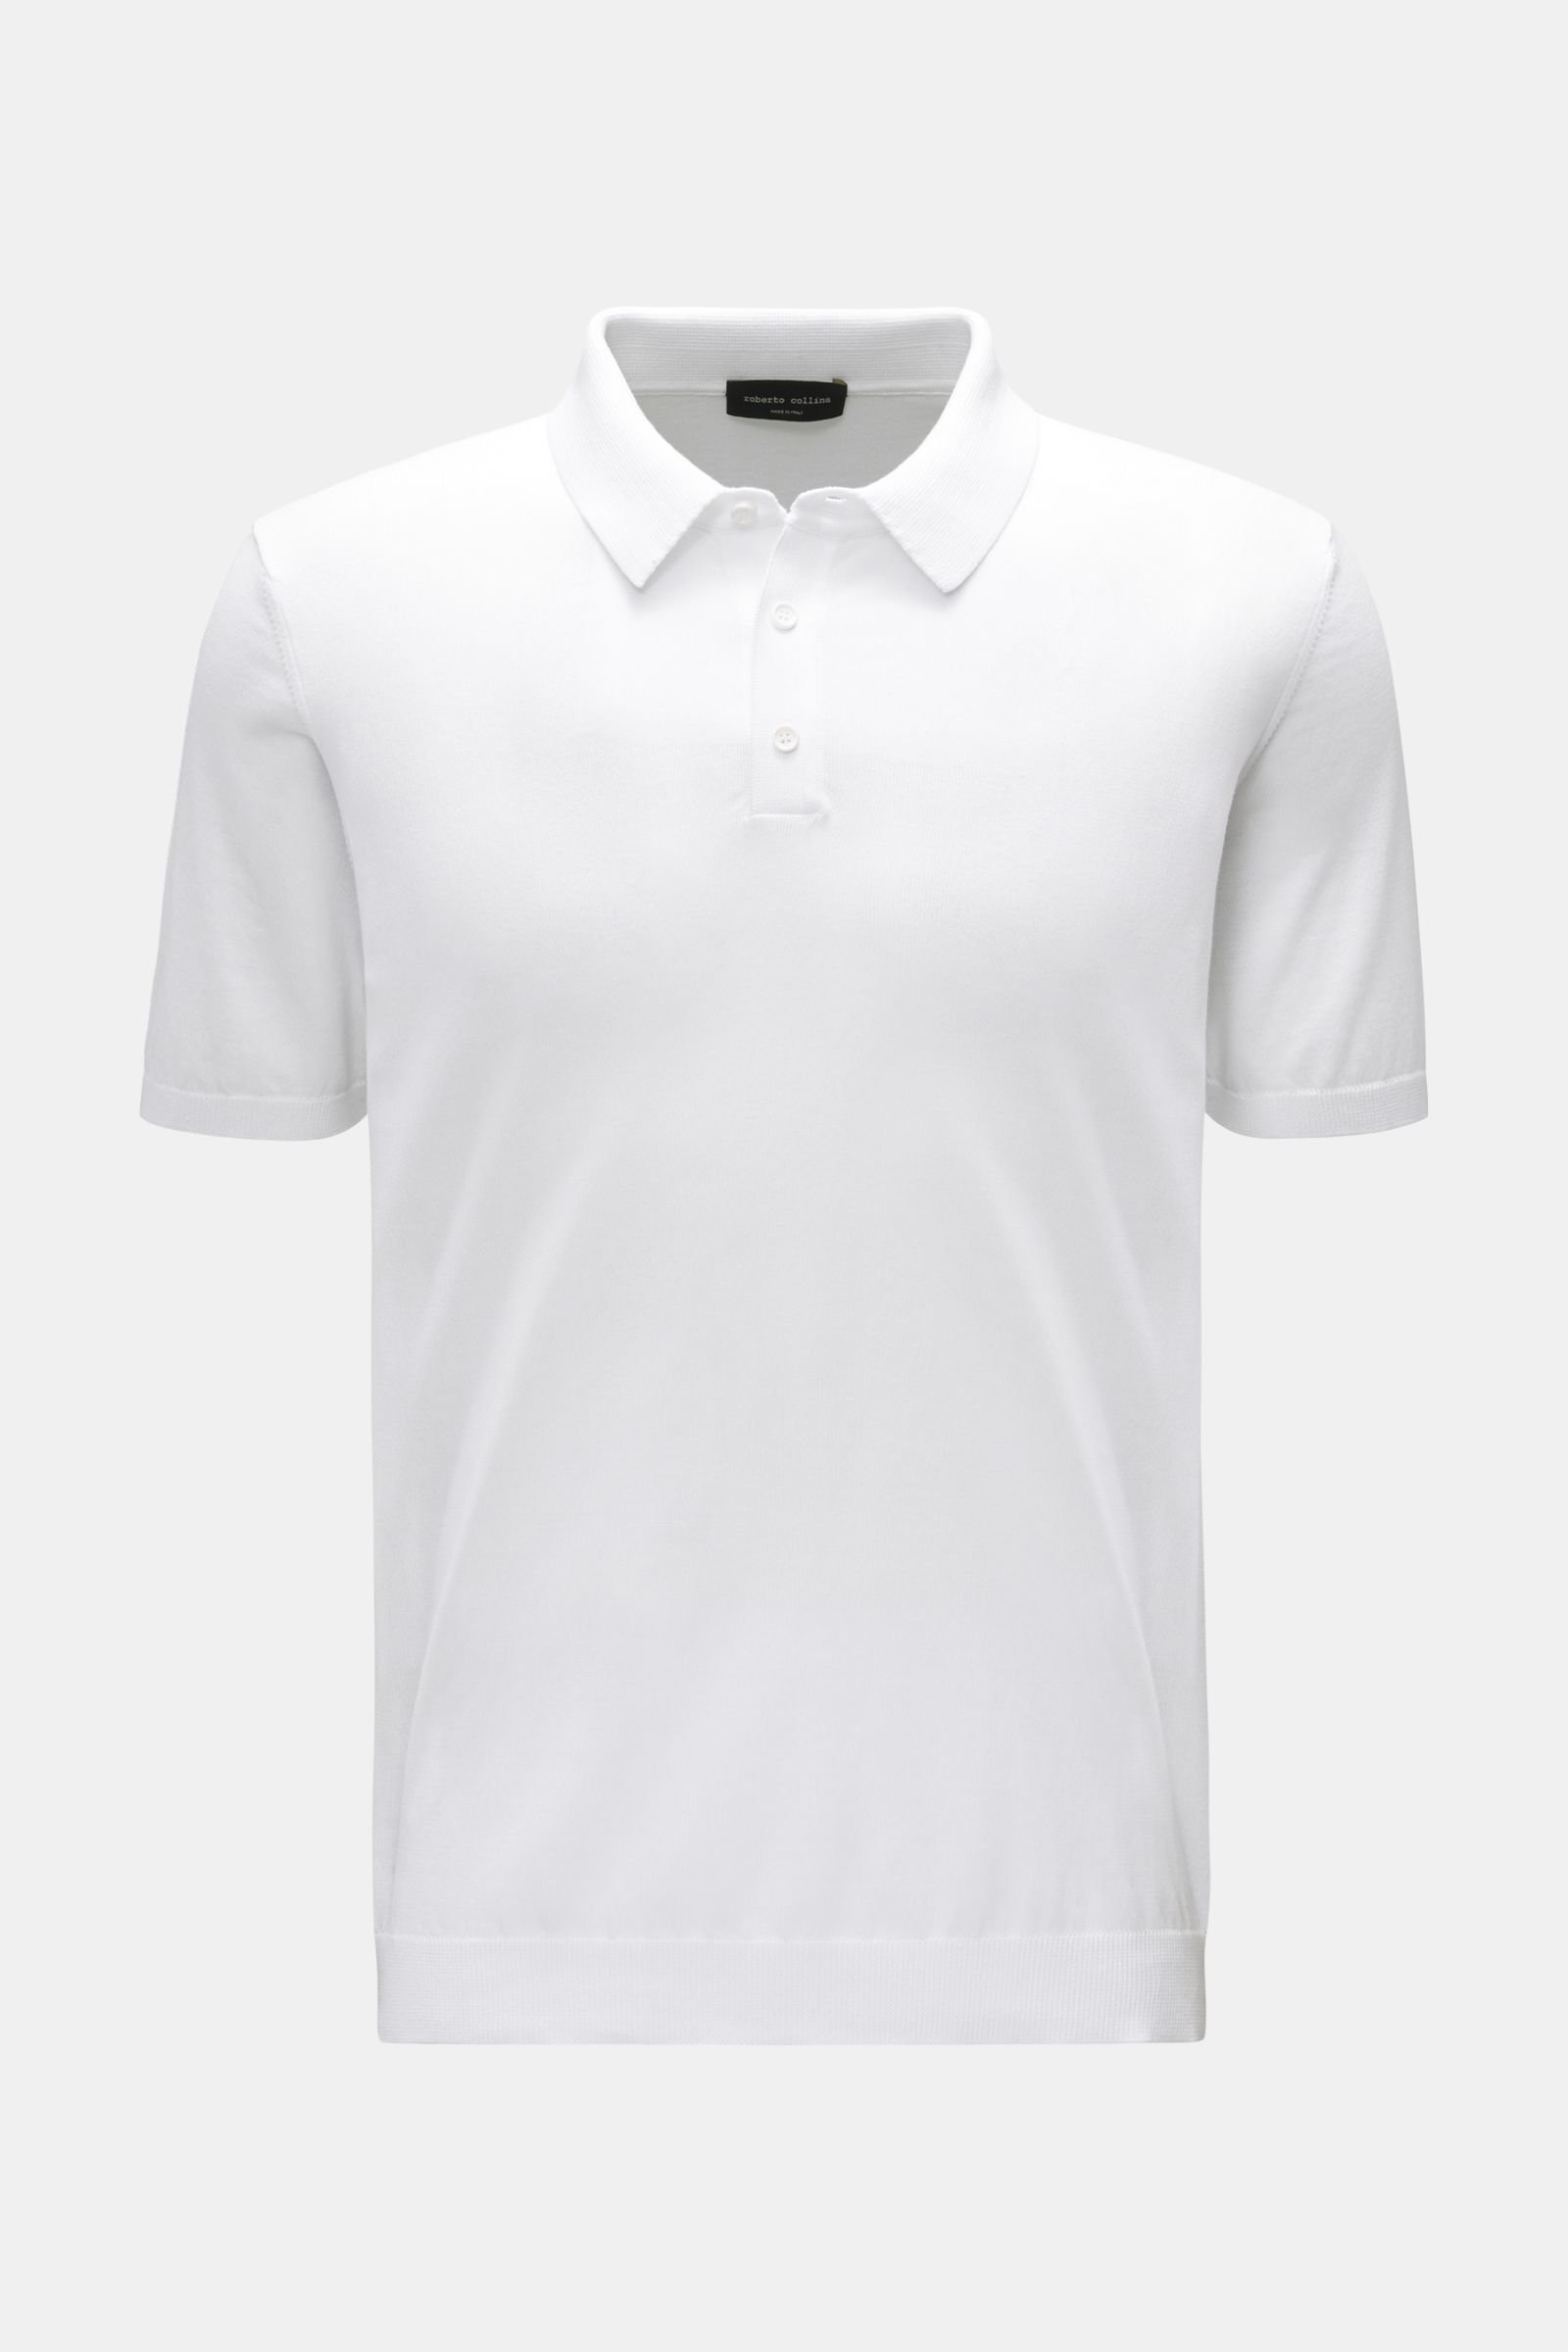 Short sleeve knit polo shirt white